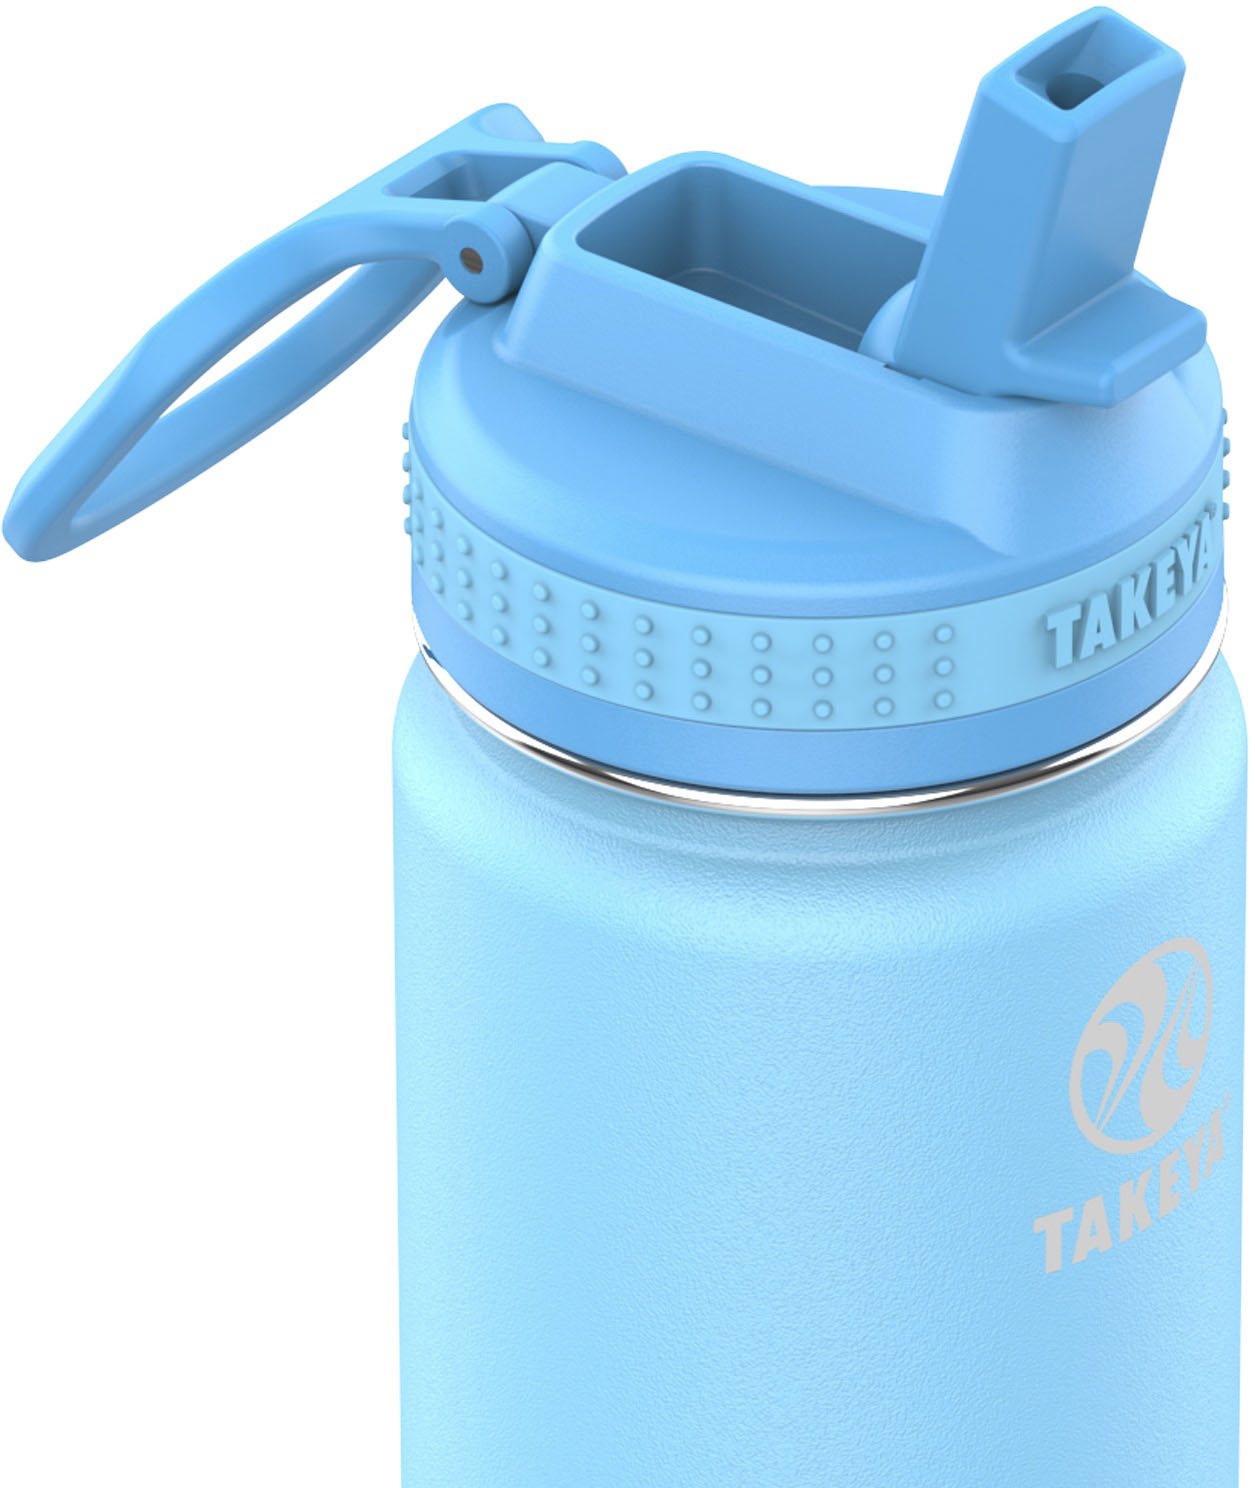 Takeya Actives Kids 14oz Straw Bottle Atlantic/Sail Blue 50314 - Best Buy